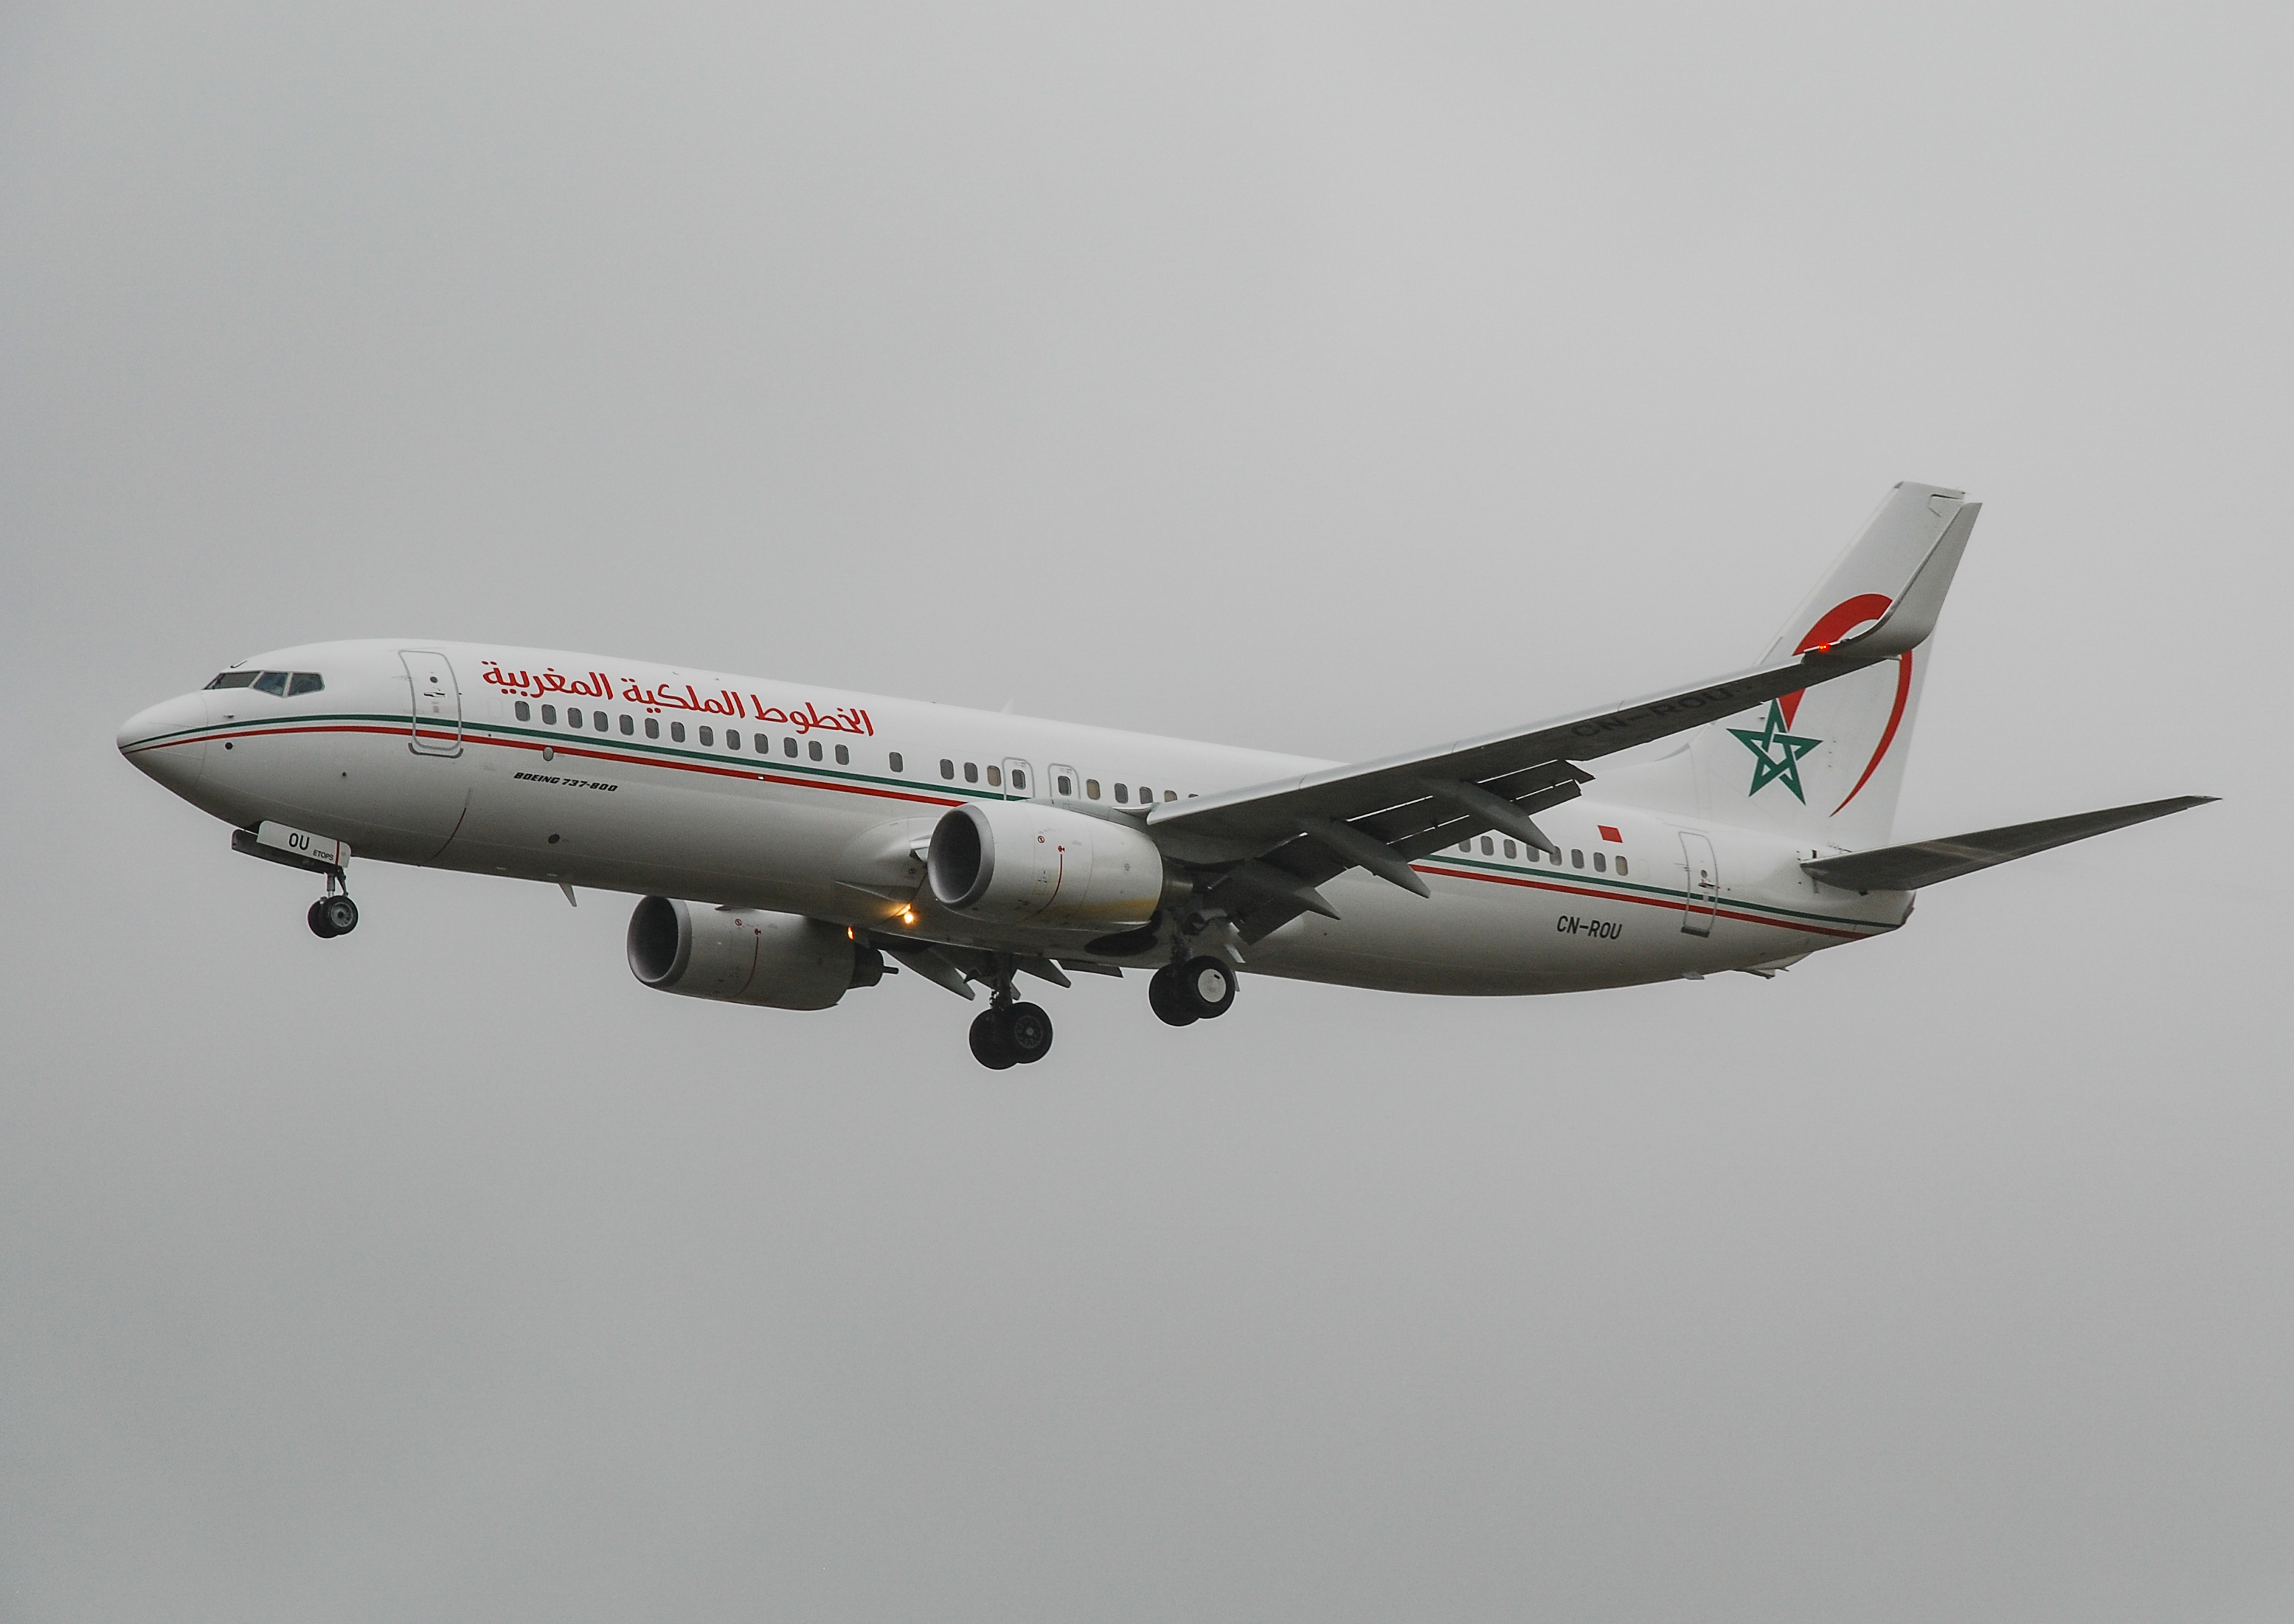 CN-ROU/CNROU RAM - Royal Air Maroc Boeing 737 NG Airframe Information - AVSpotters.com